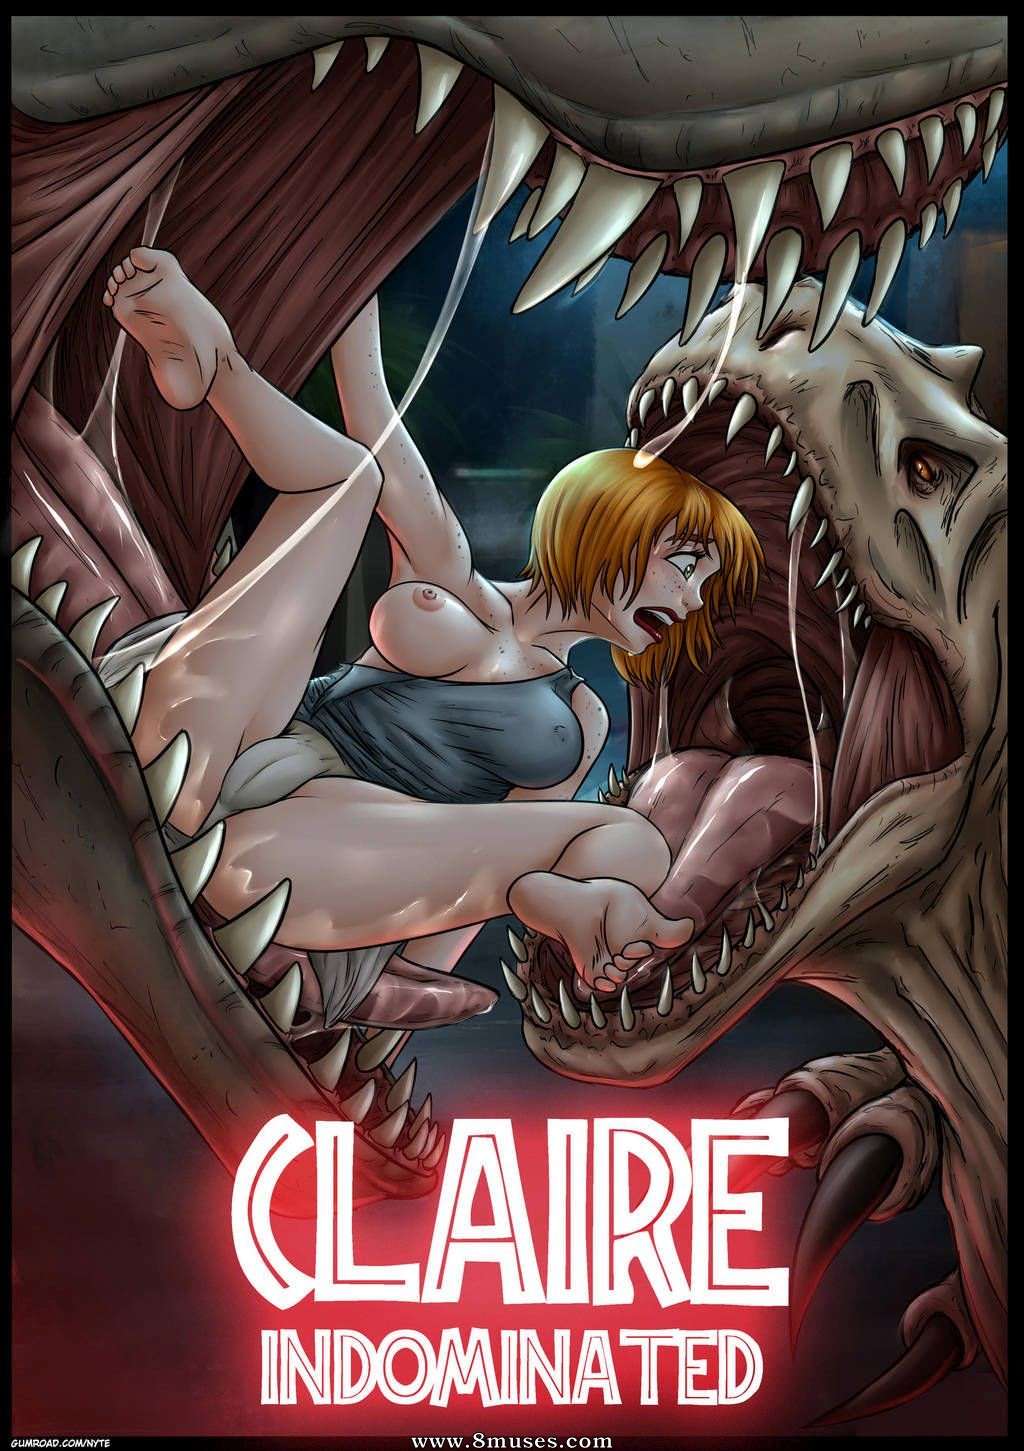 Jurassic world porn comics with clair